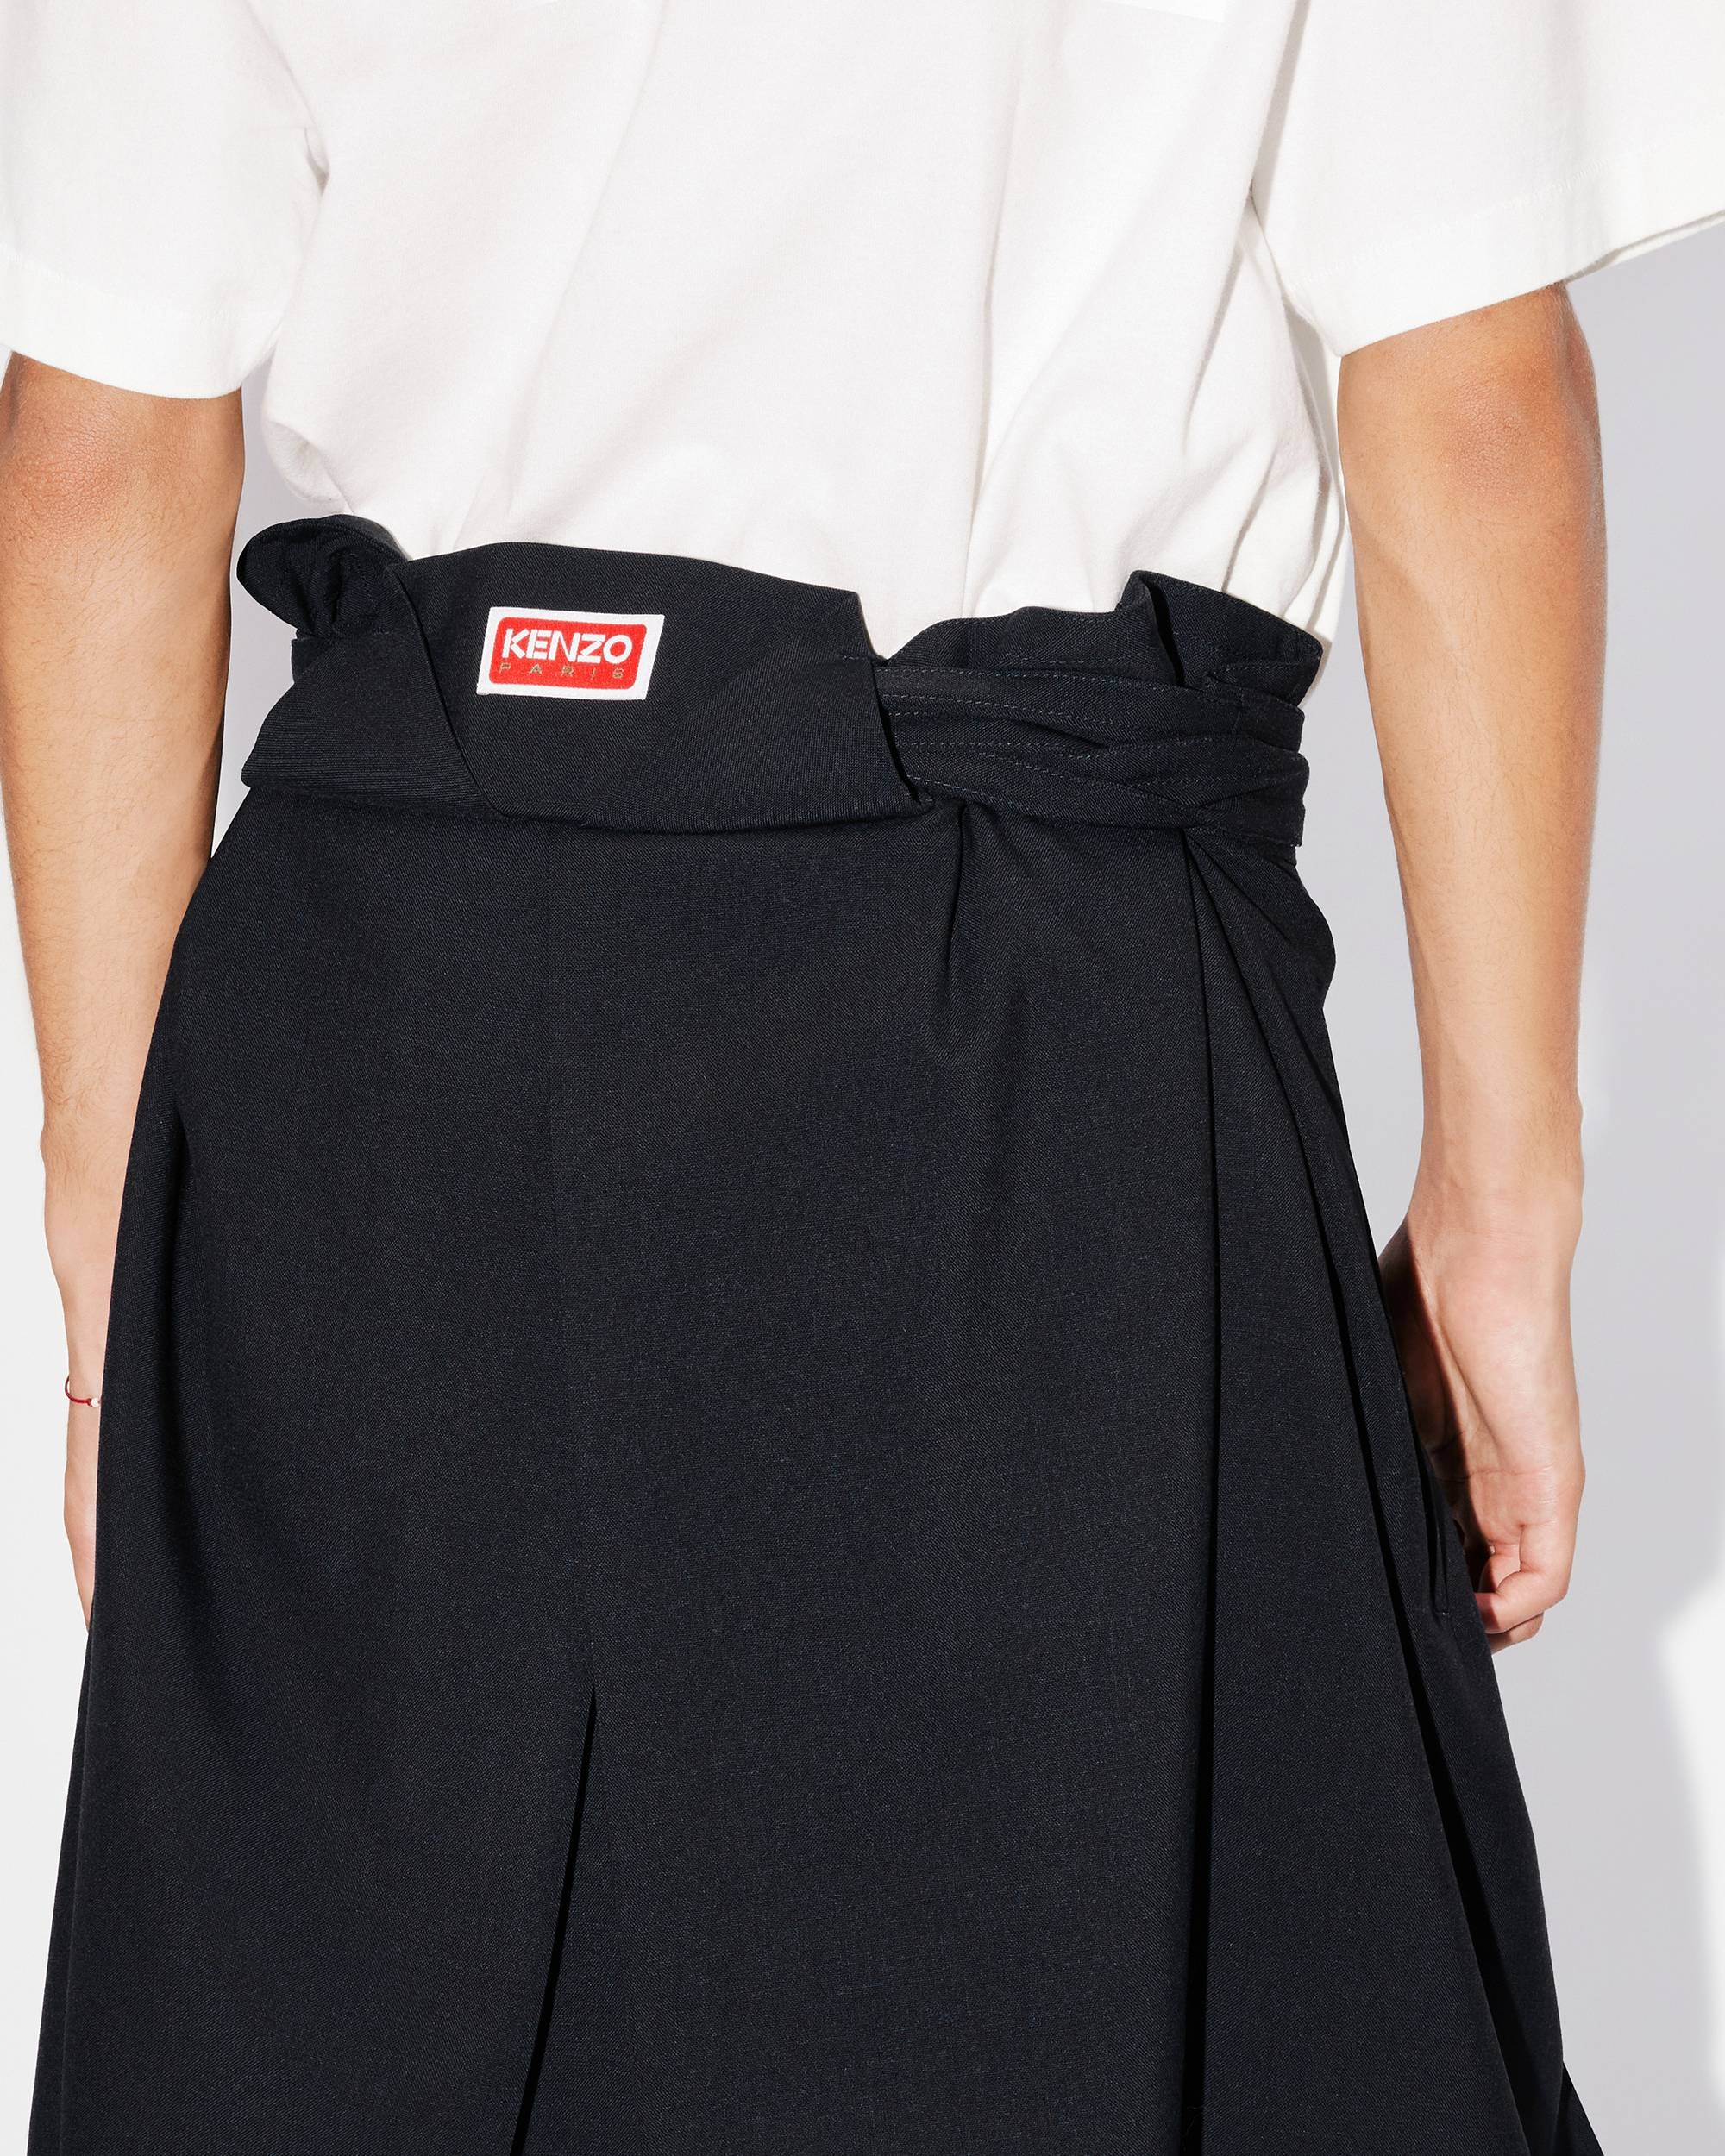 Kendo shorts - 6